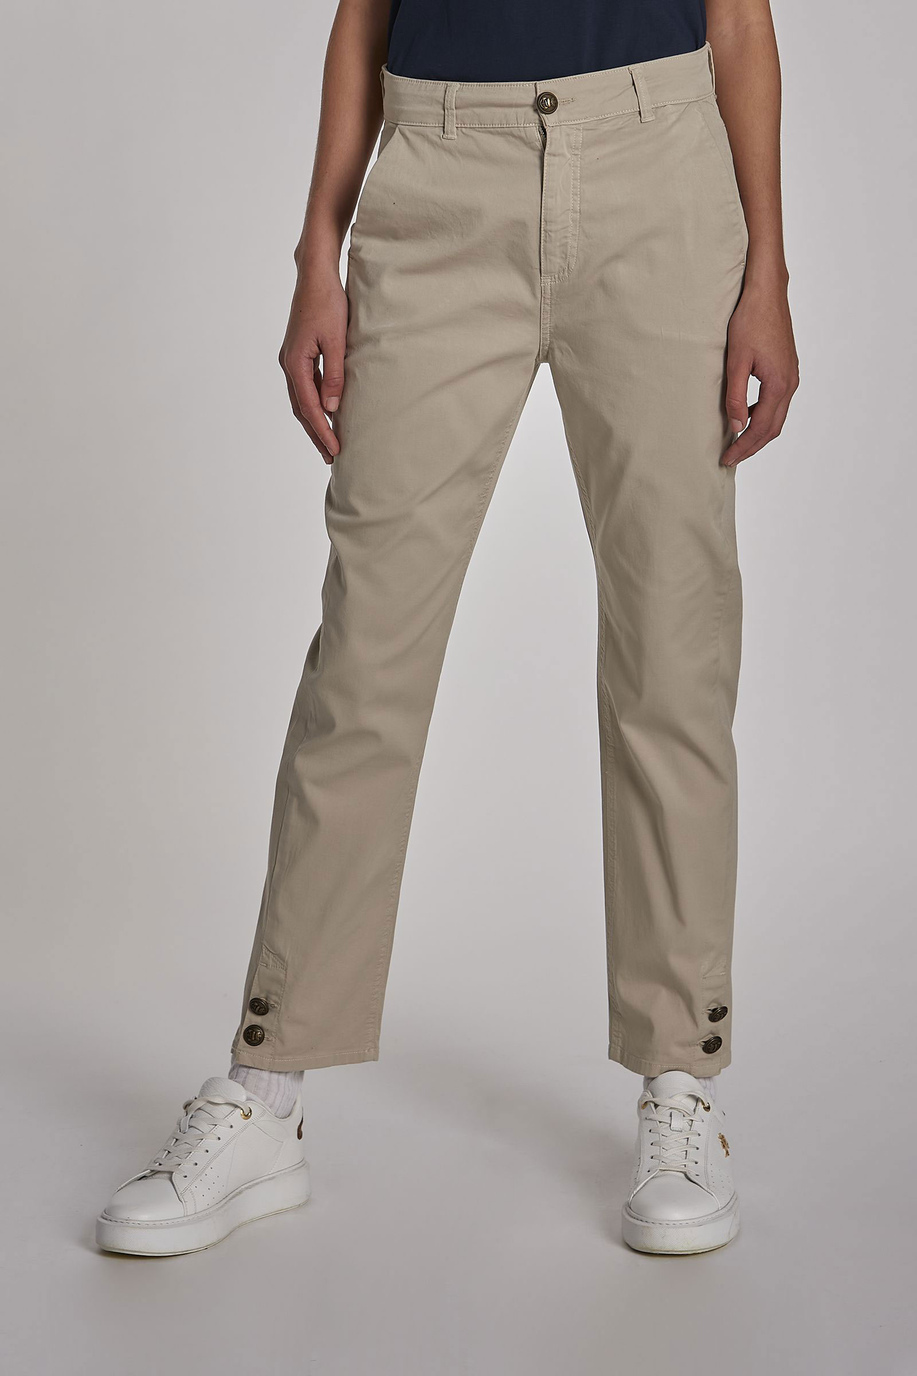 Pantalón de mujer, modelo 5 bolsillos de algodón, corte regular - Pantalones | La Martina - Official Online Shop